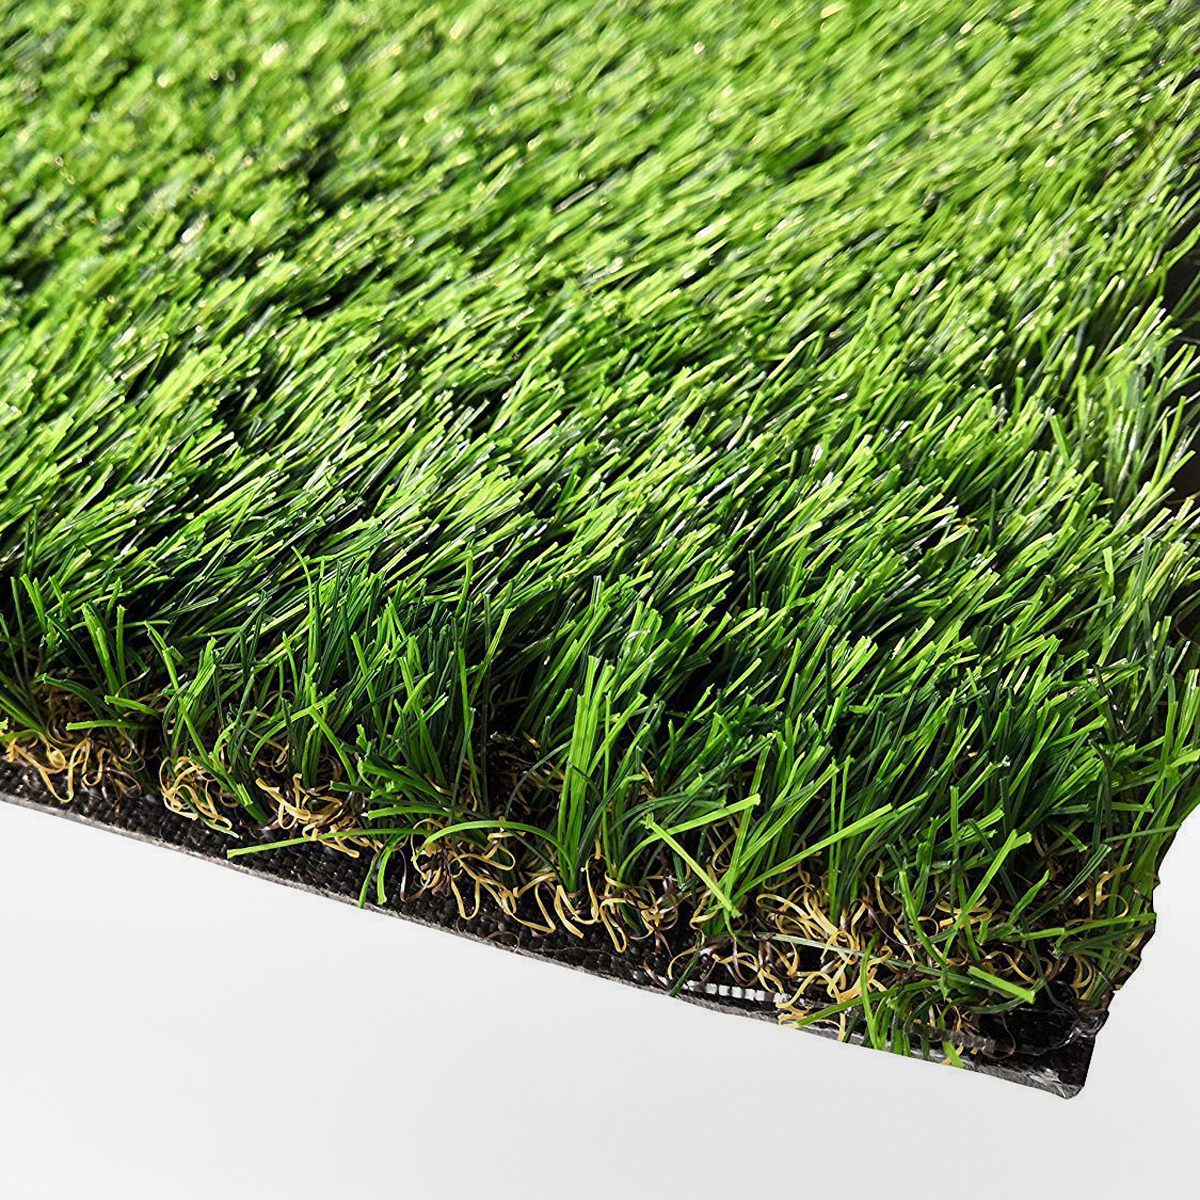 Pzg Commerical Artificial Grass Patch Ecomm Amazon.com